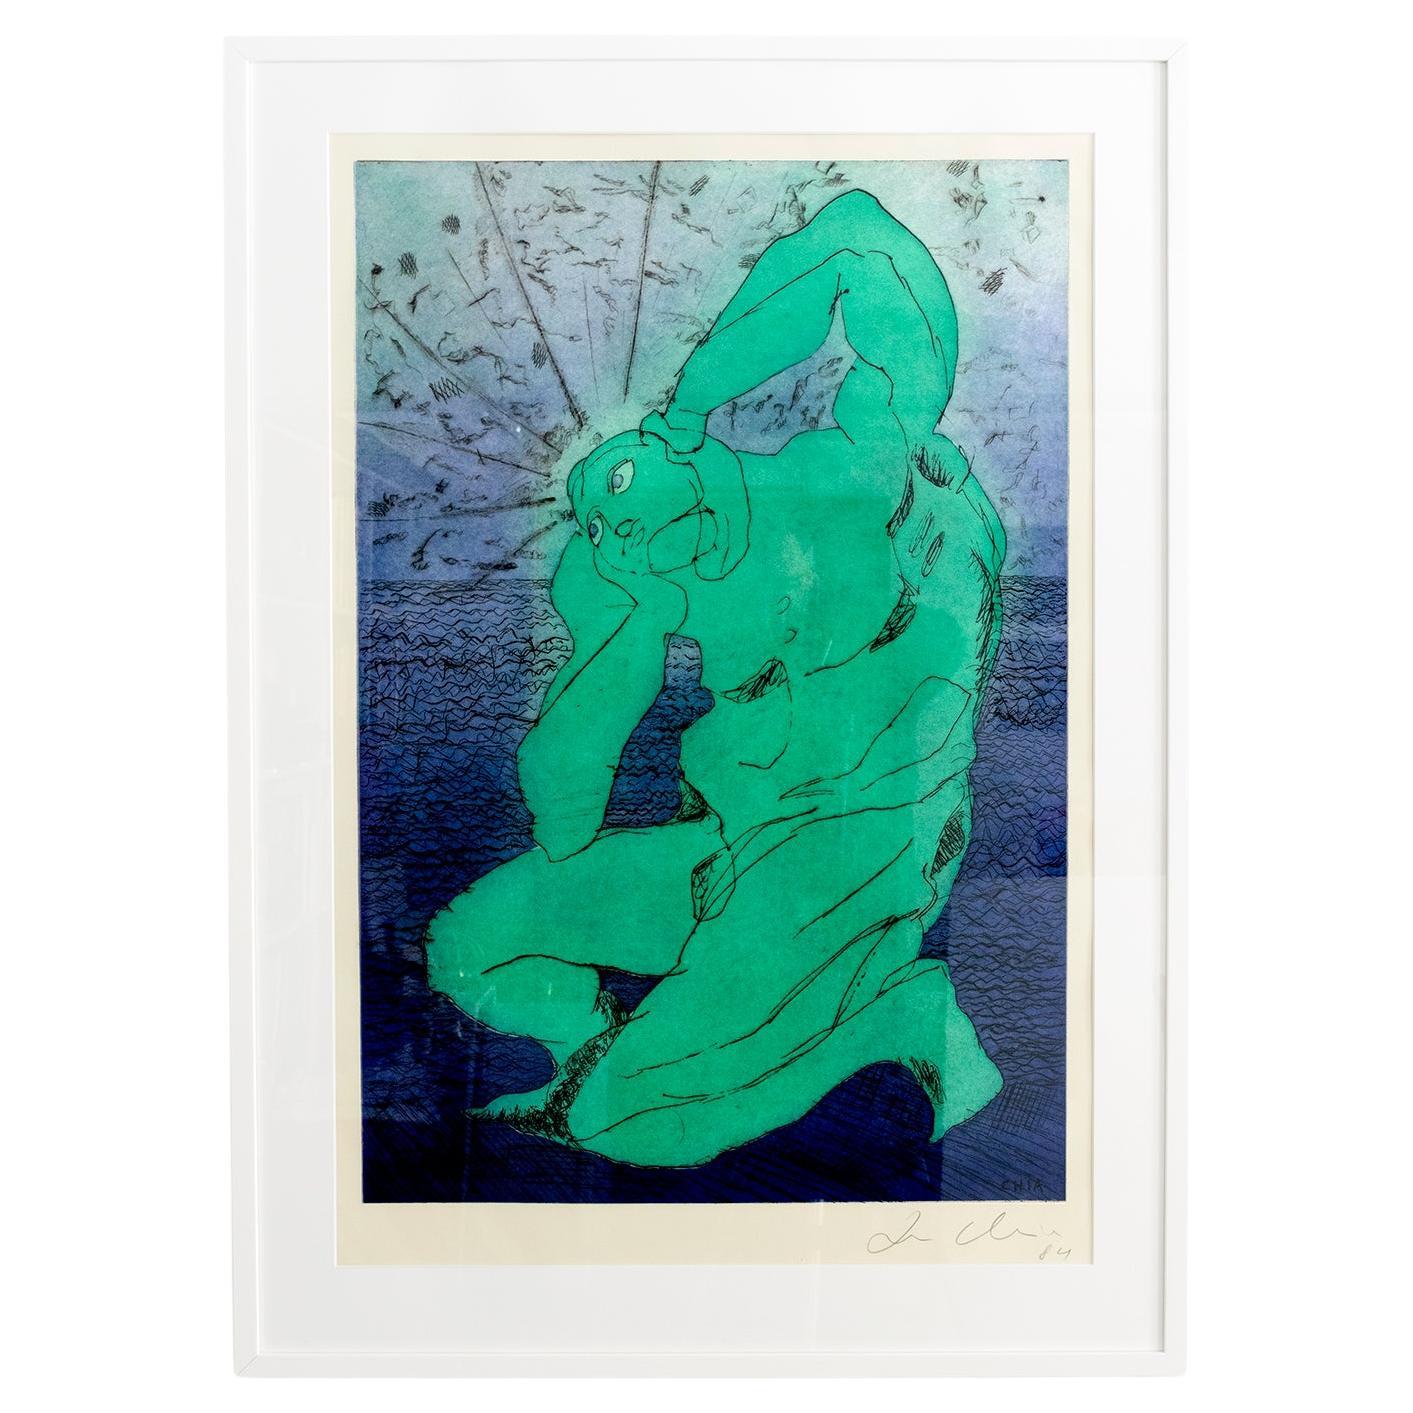 Sandro Chia Aquatint Print in Green & Blue, "Man & Sea" Post Modern For Sale